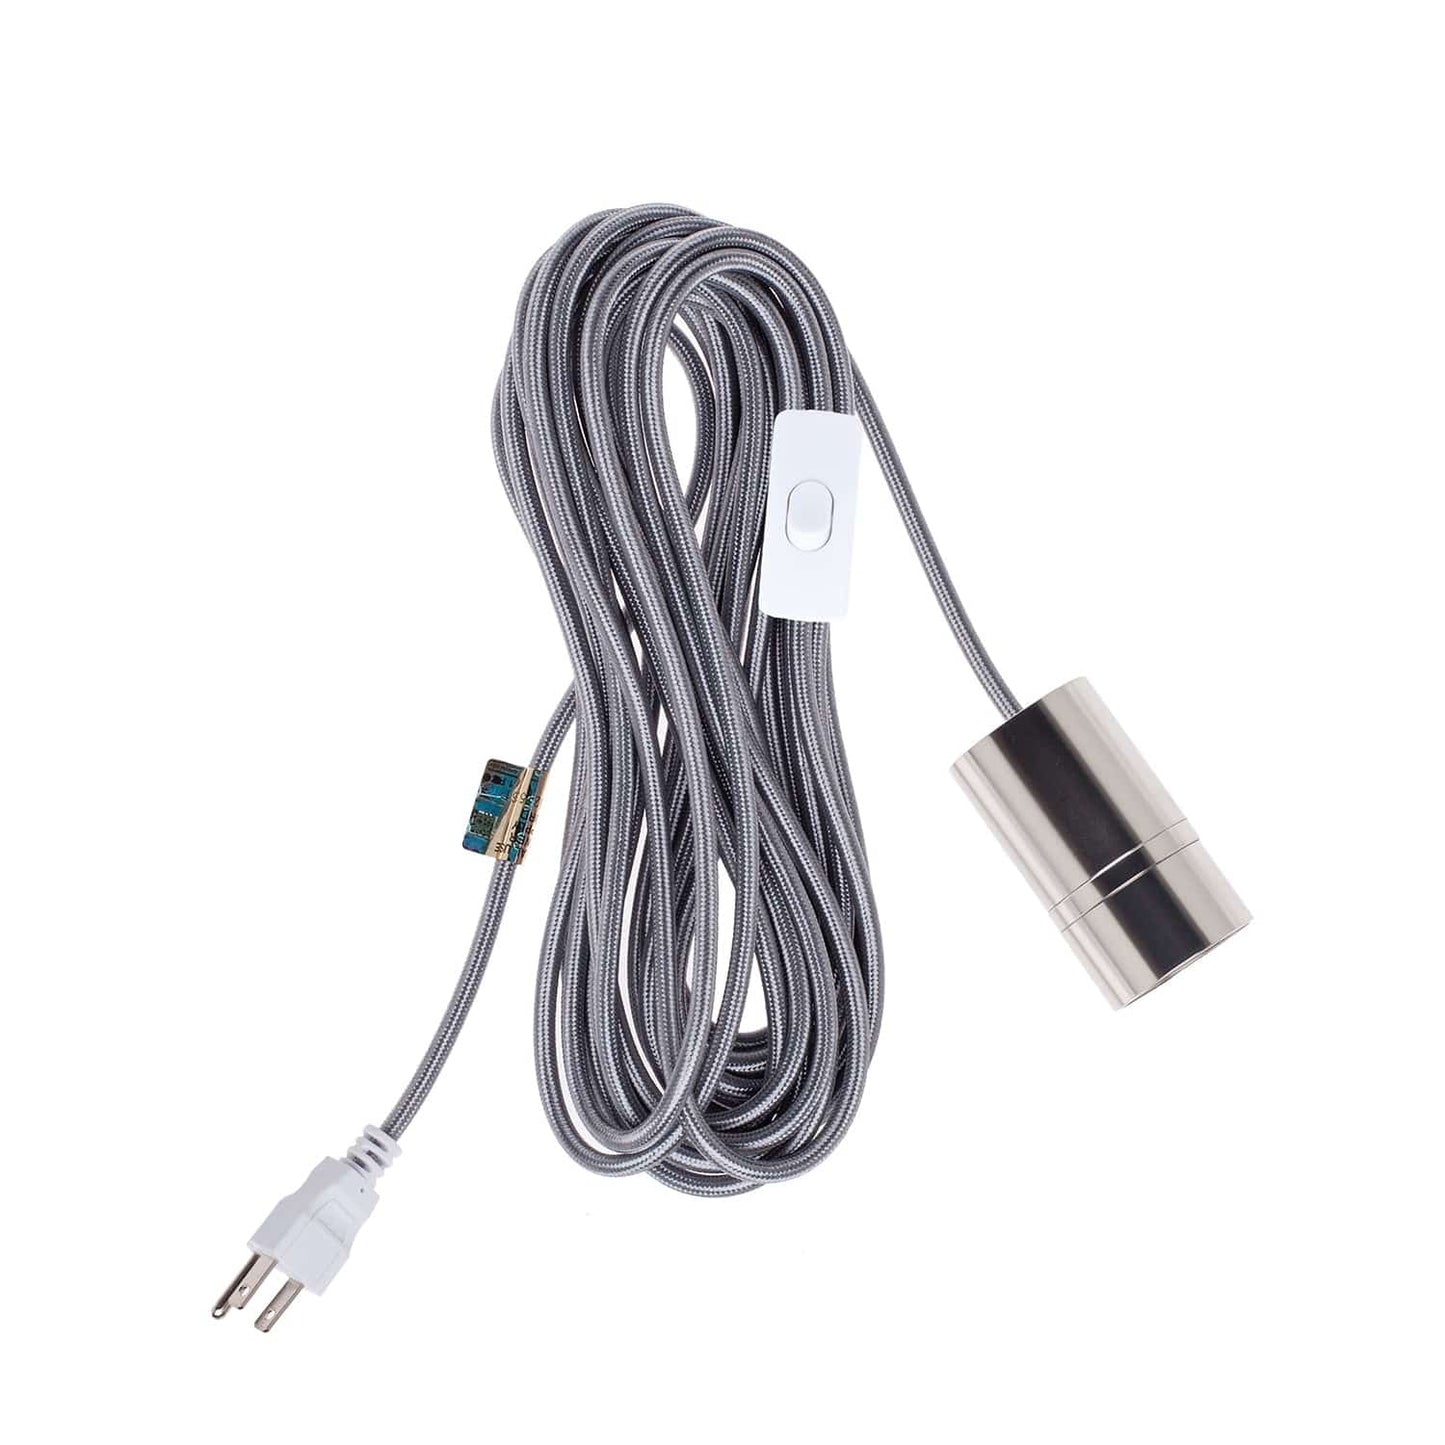 AiO Nickel Chroma Plug-In Cord Set